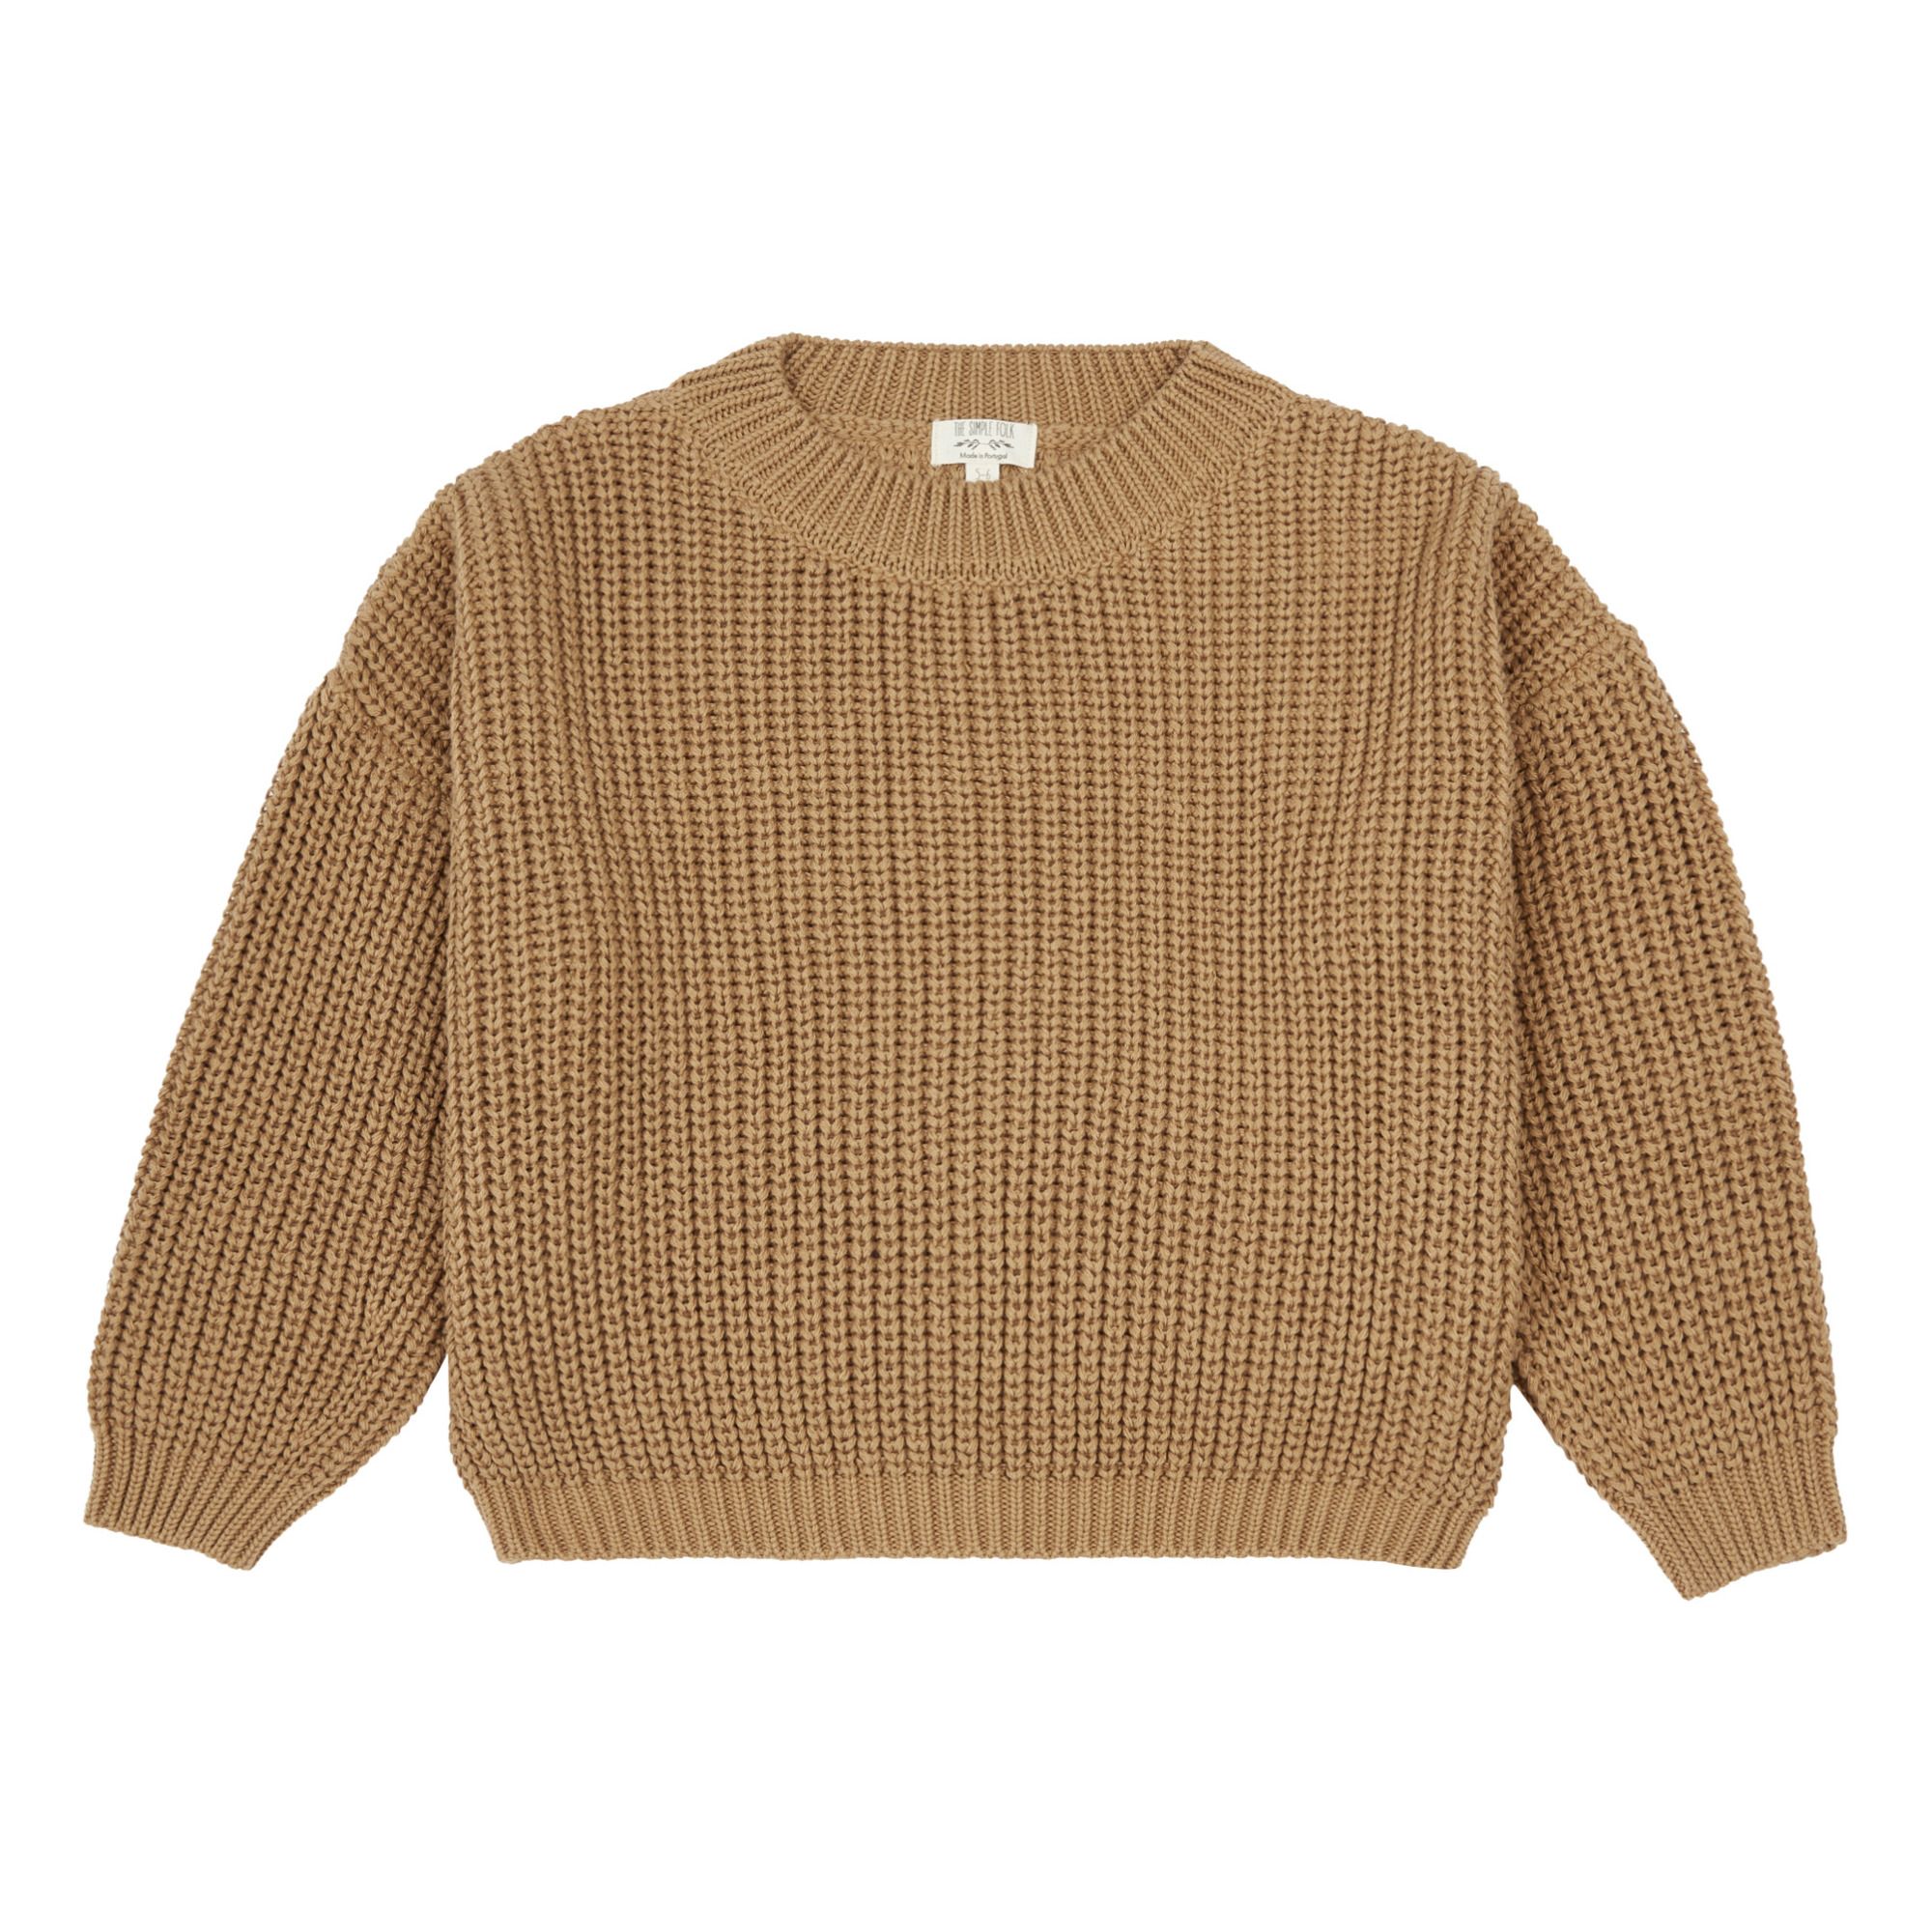 The Simple - Folk Smallable Caramel Organic Sweatshirt Cotton - Knitted 